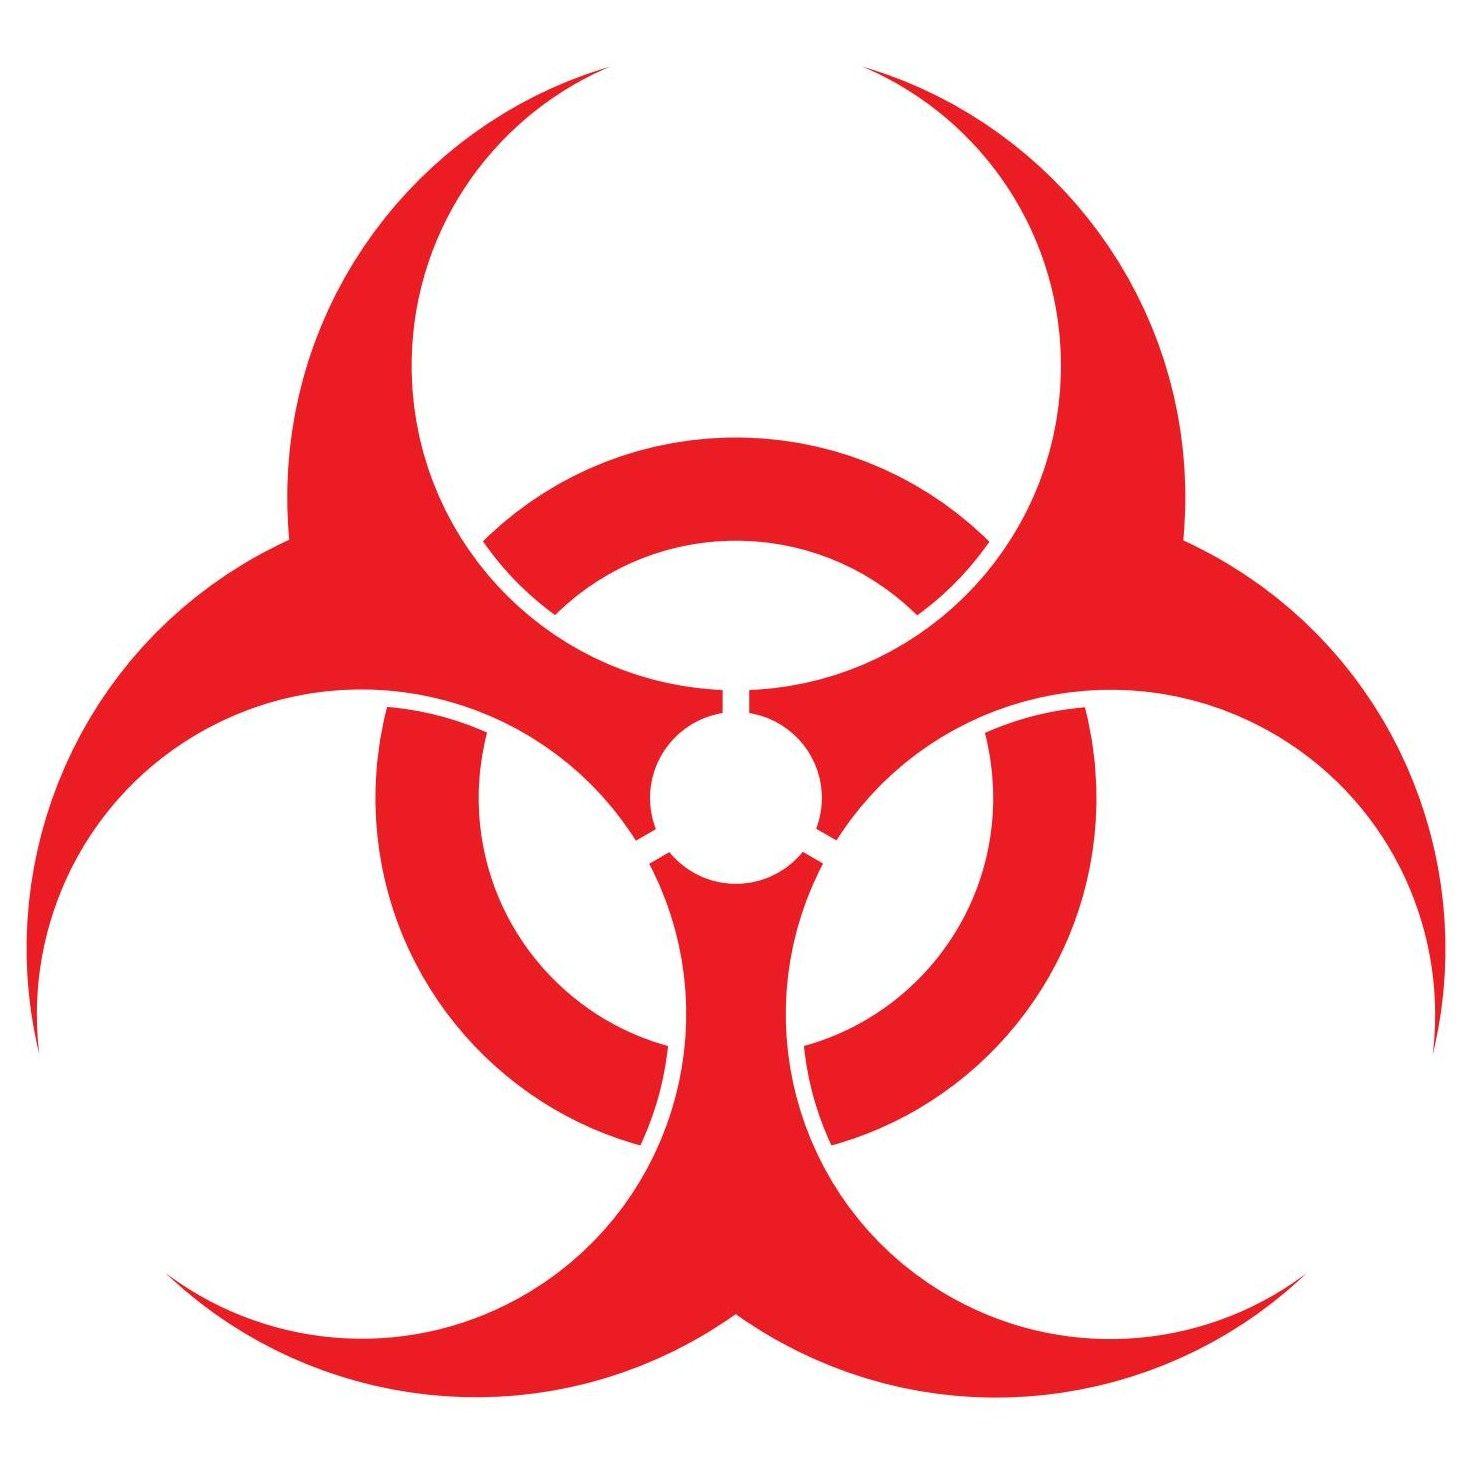 Biohazard Logo - Biohazard Symbol Red | Universal-Labels/Logos/Symbols | Symbols ...